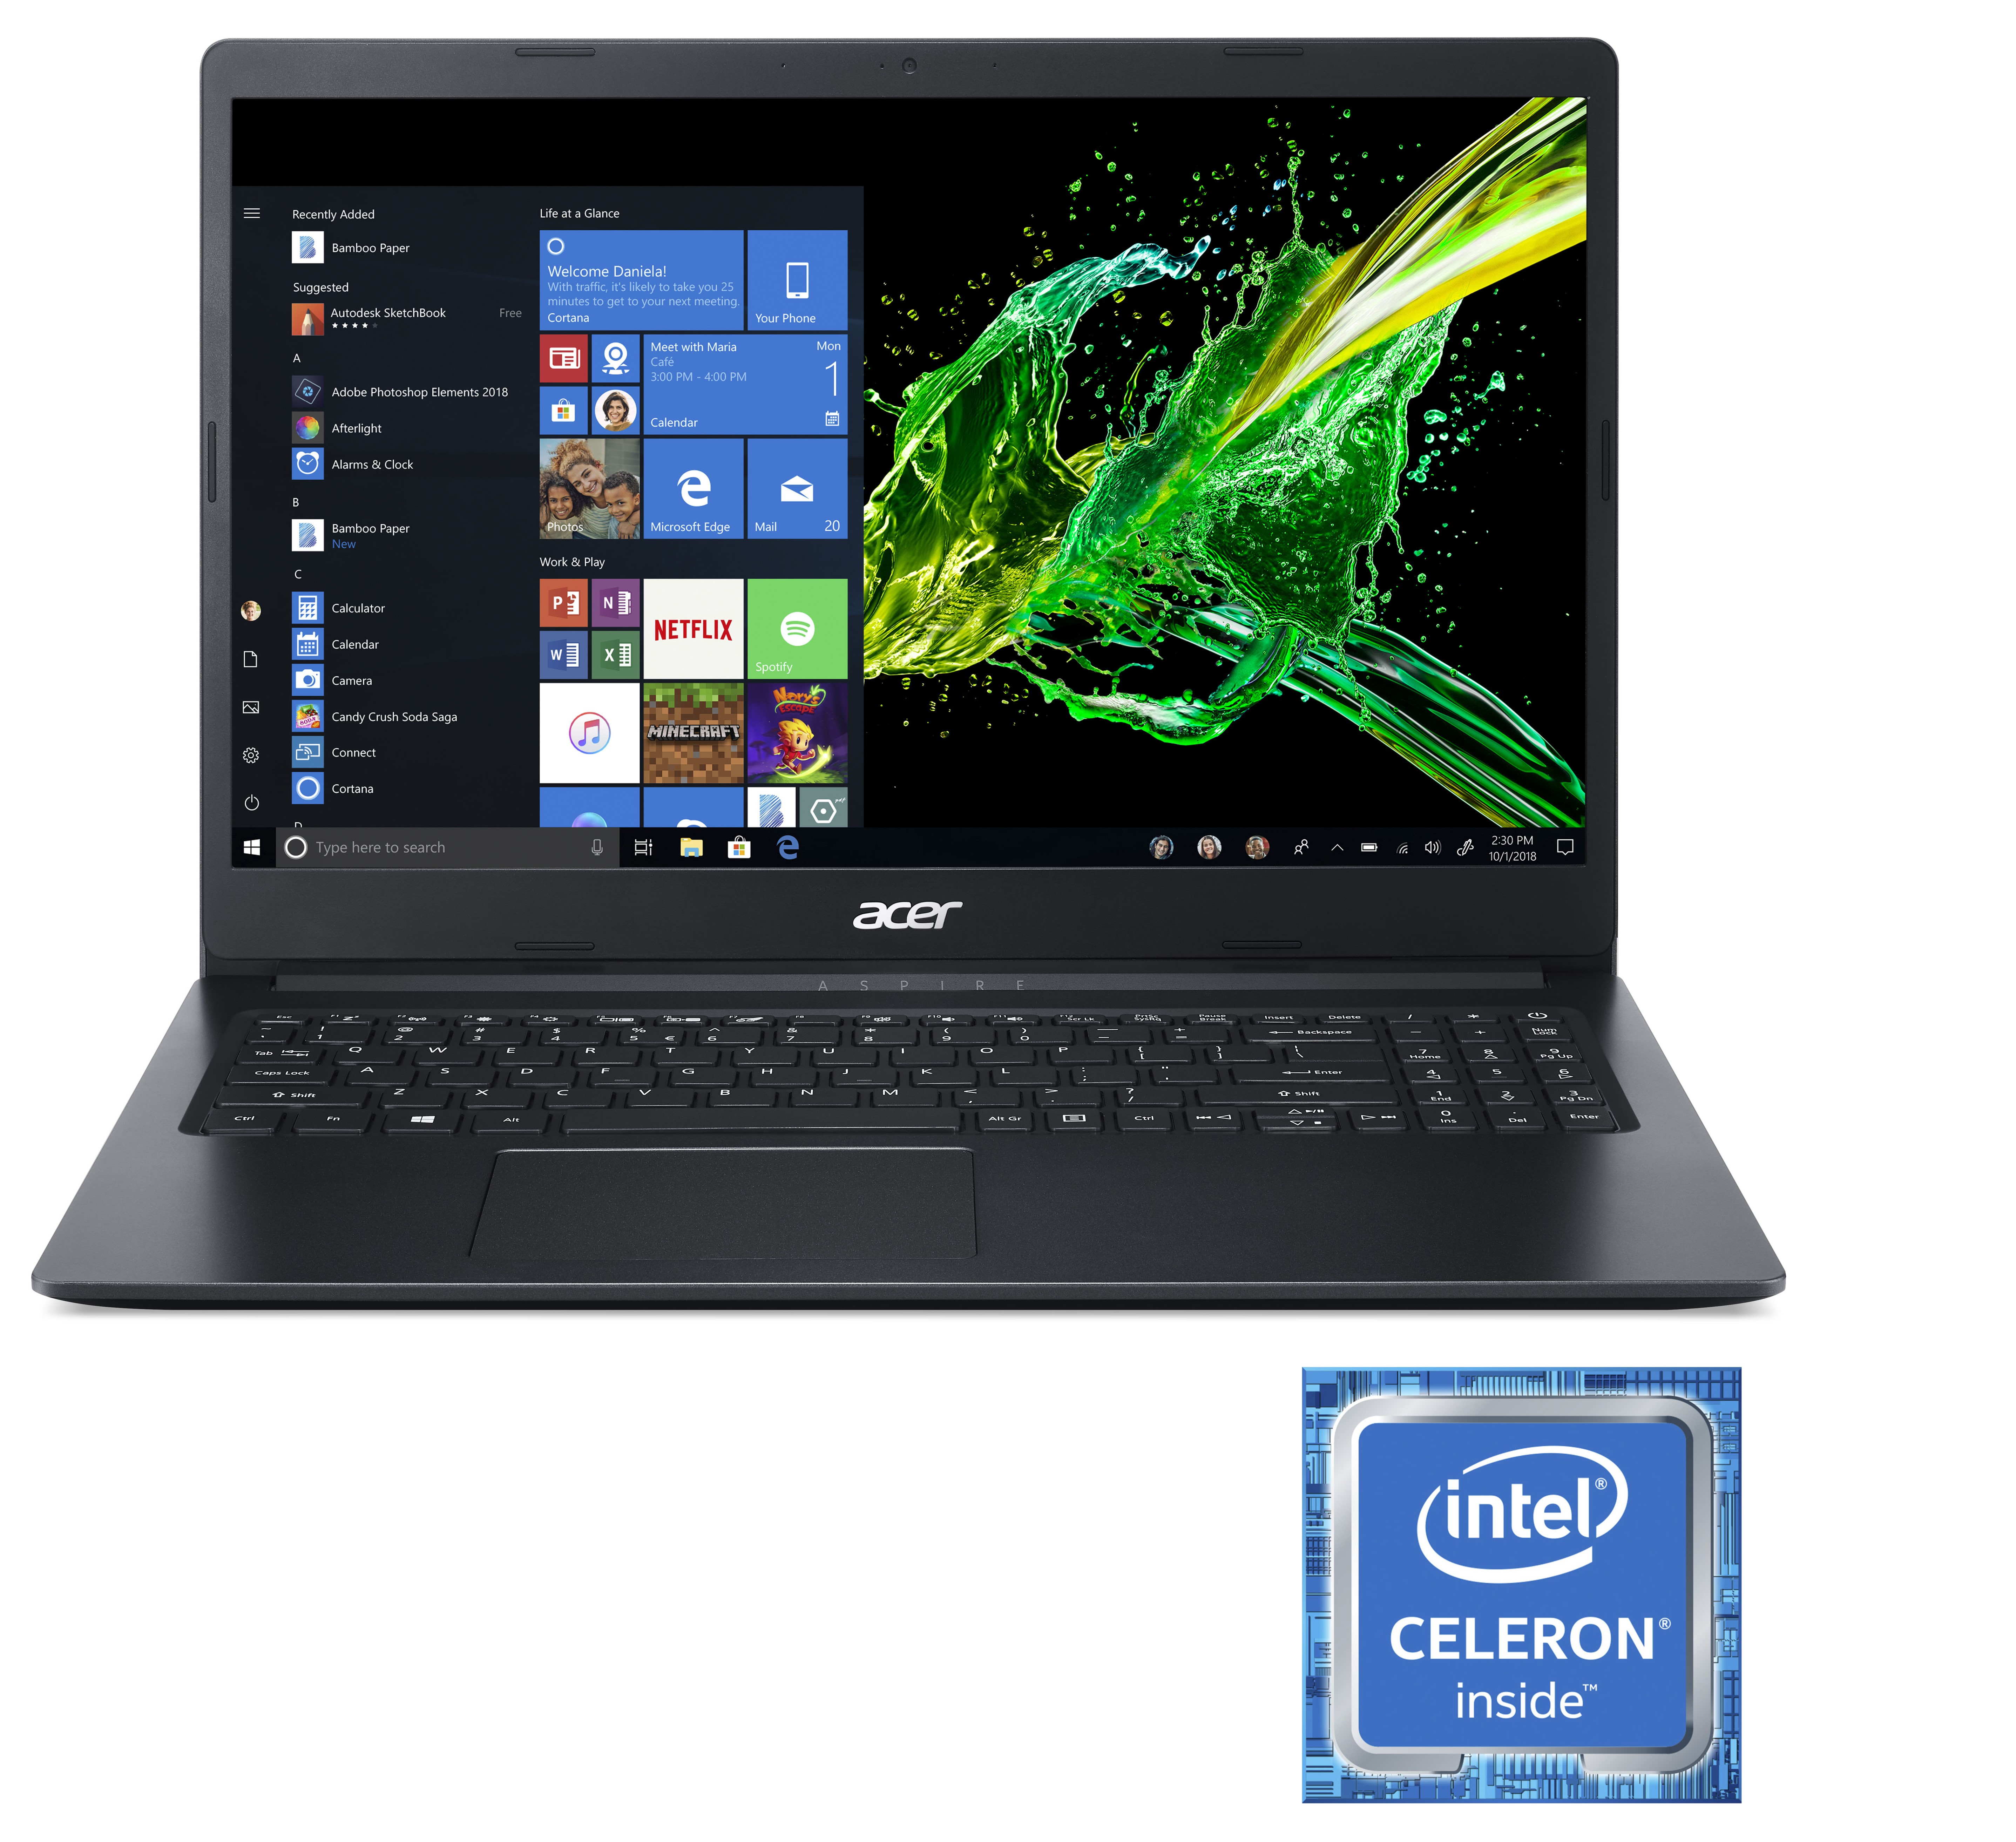 Acer Aspire 1, 15.6" HD, Intel Celeron N4000, 4GB DDR4 RAM, 64GB eMMC, Windows 10 in S mode, A115-31-C23T - image 1 of 3